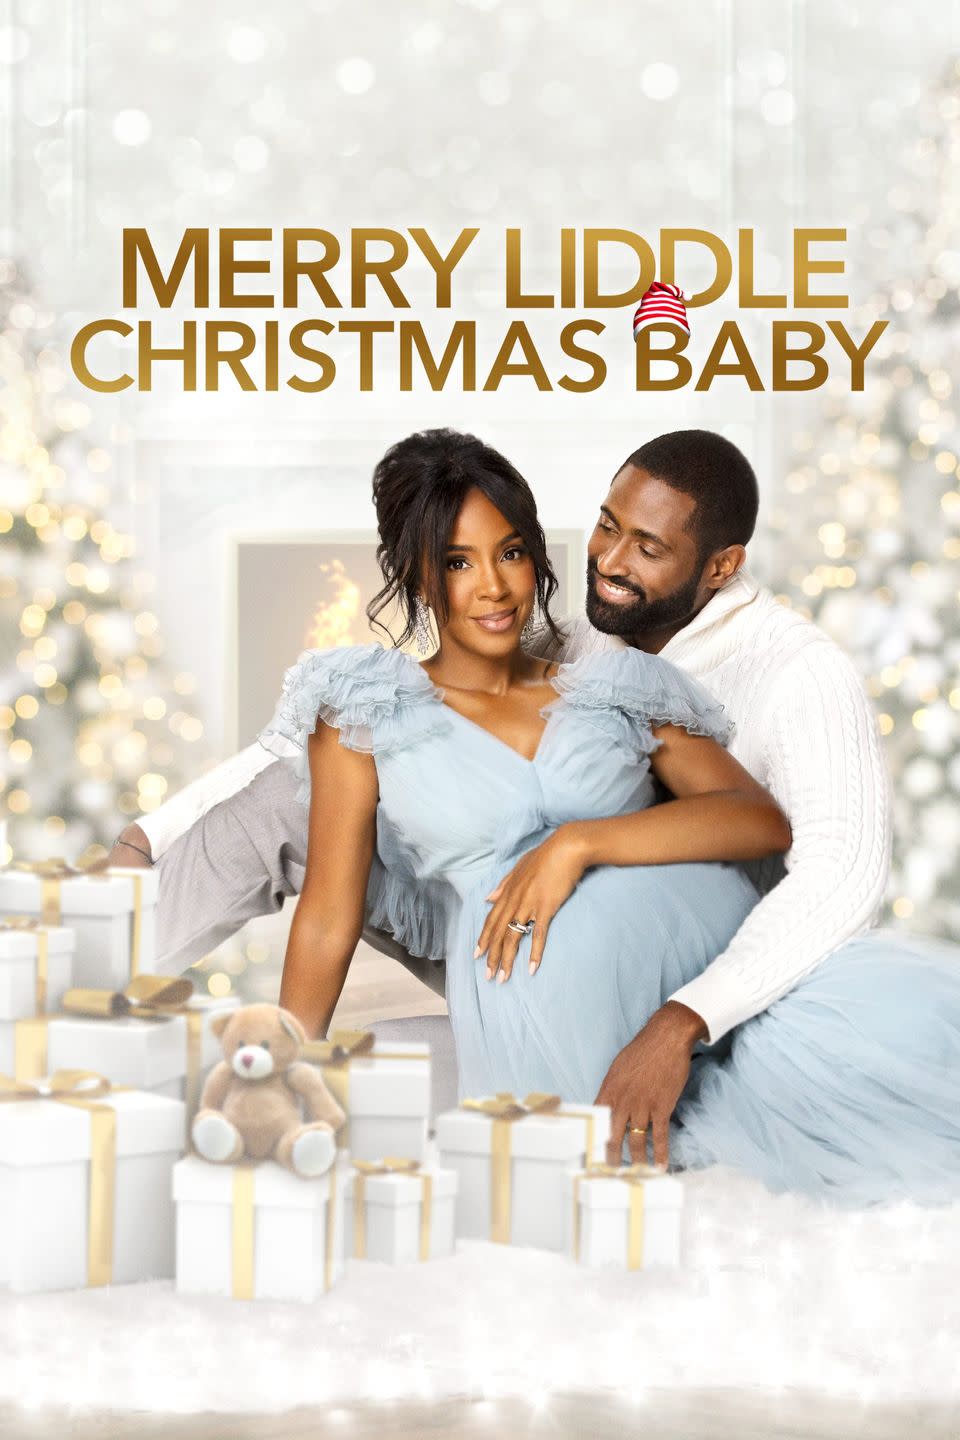 "Merry Liddle Christmas Baby"